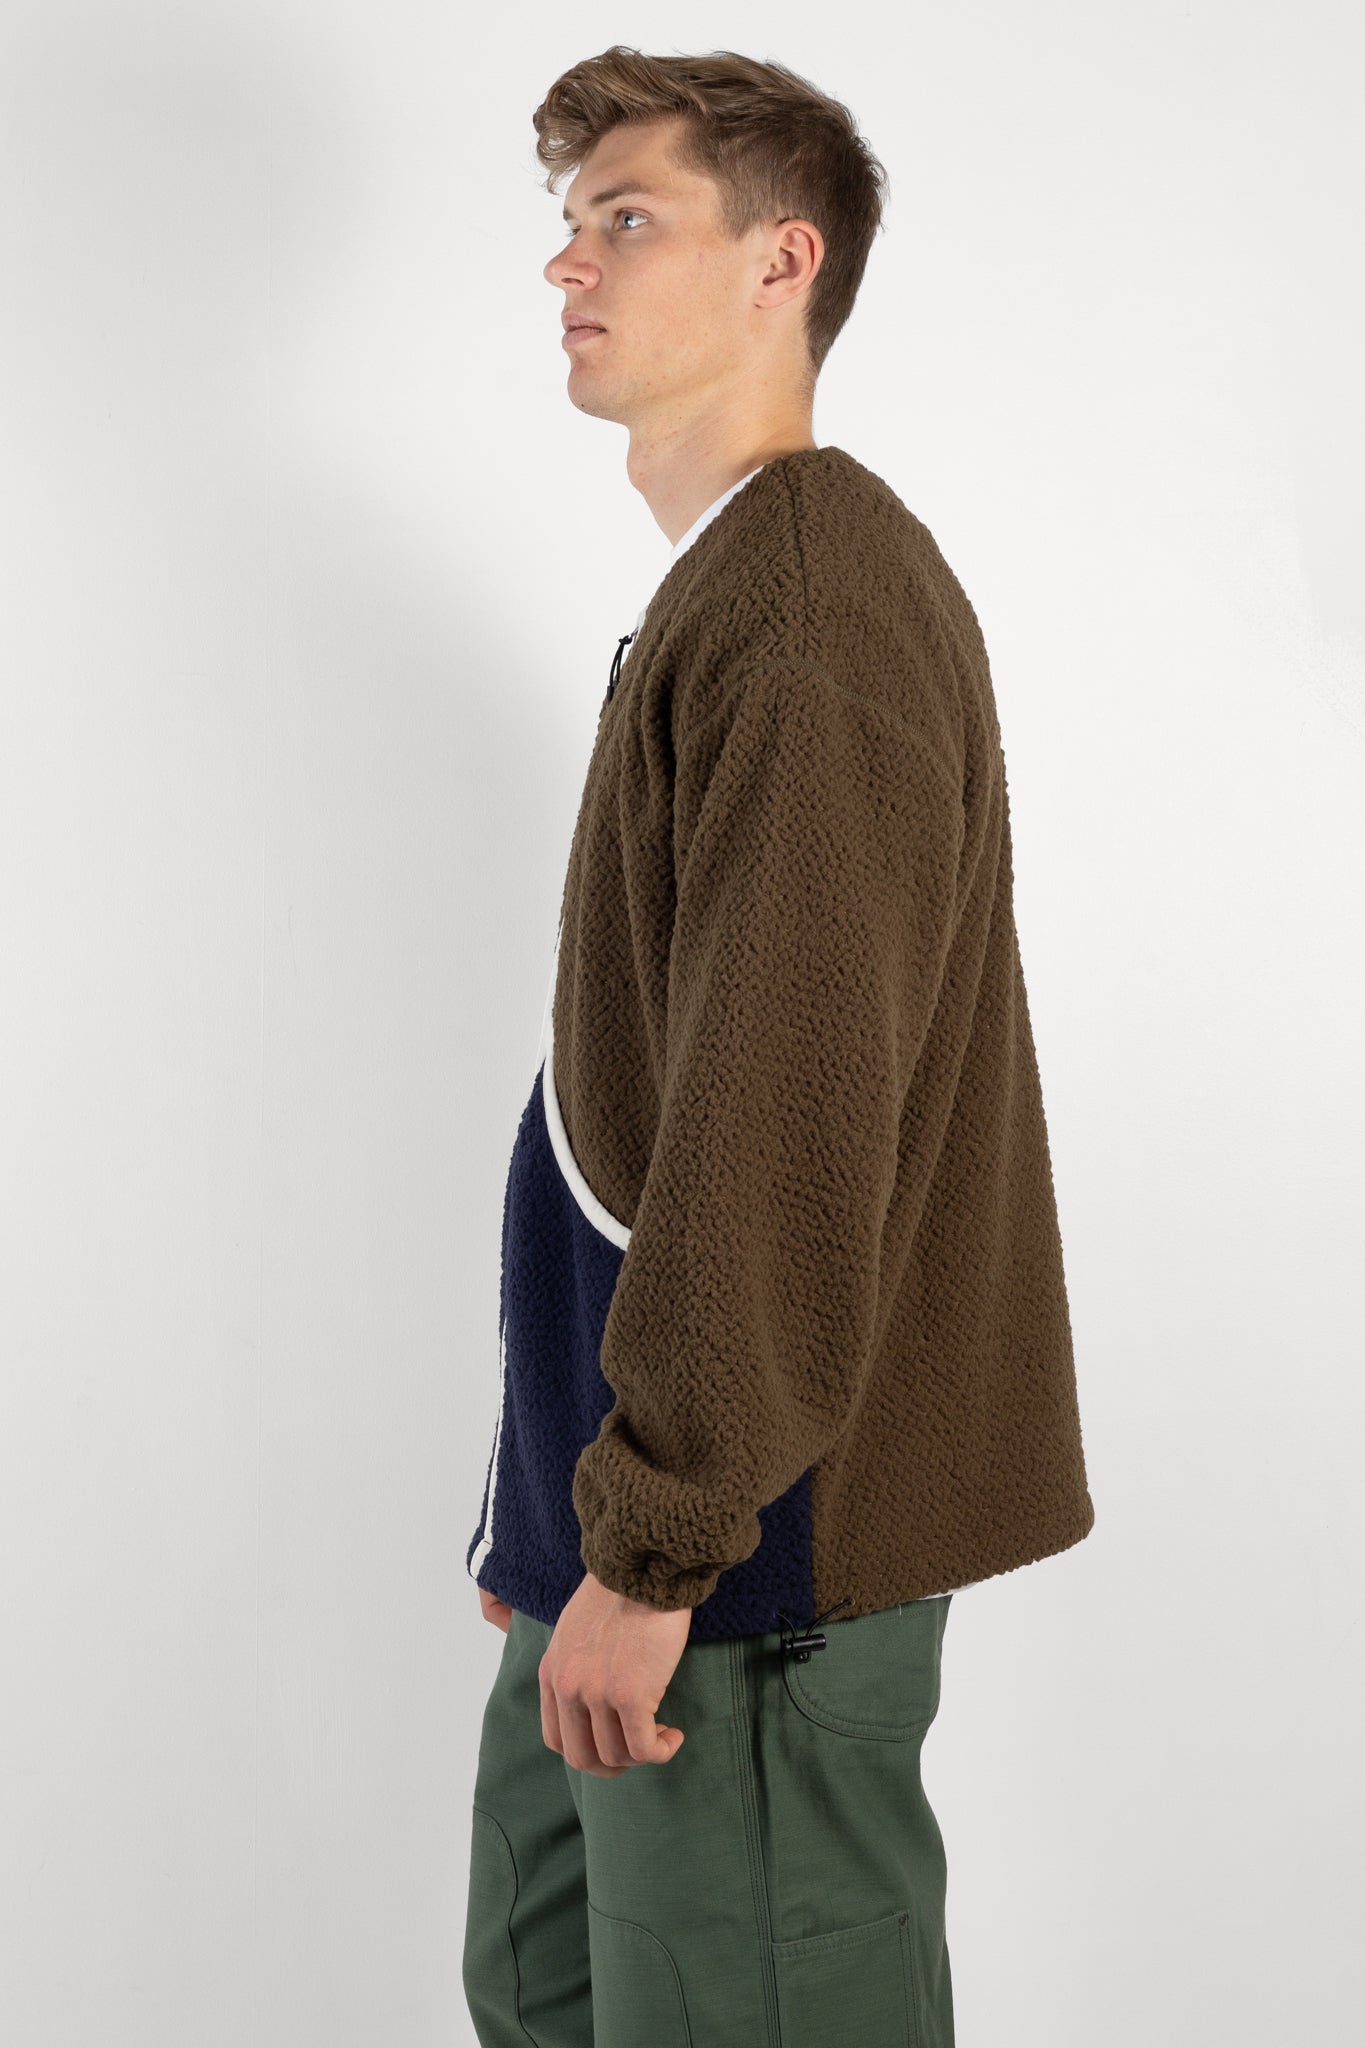 Mens jacket | Garbstore contrast jacket | The Standard Store